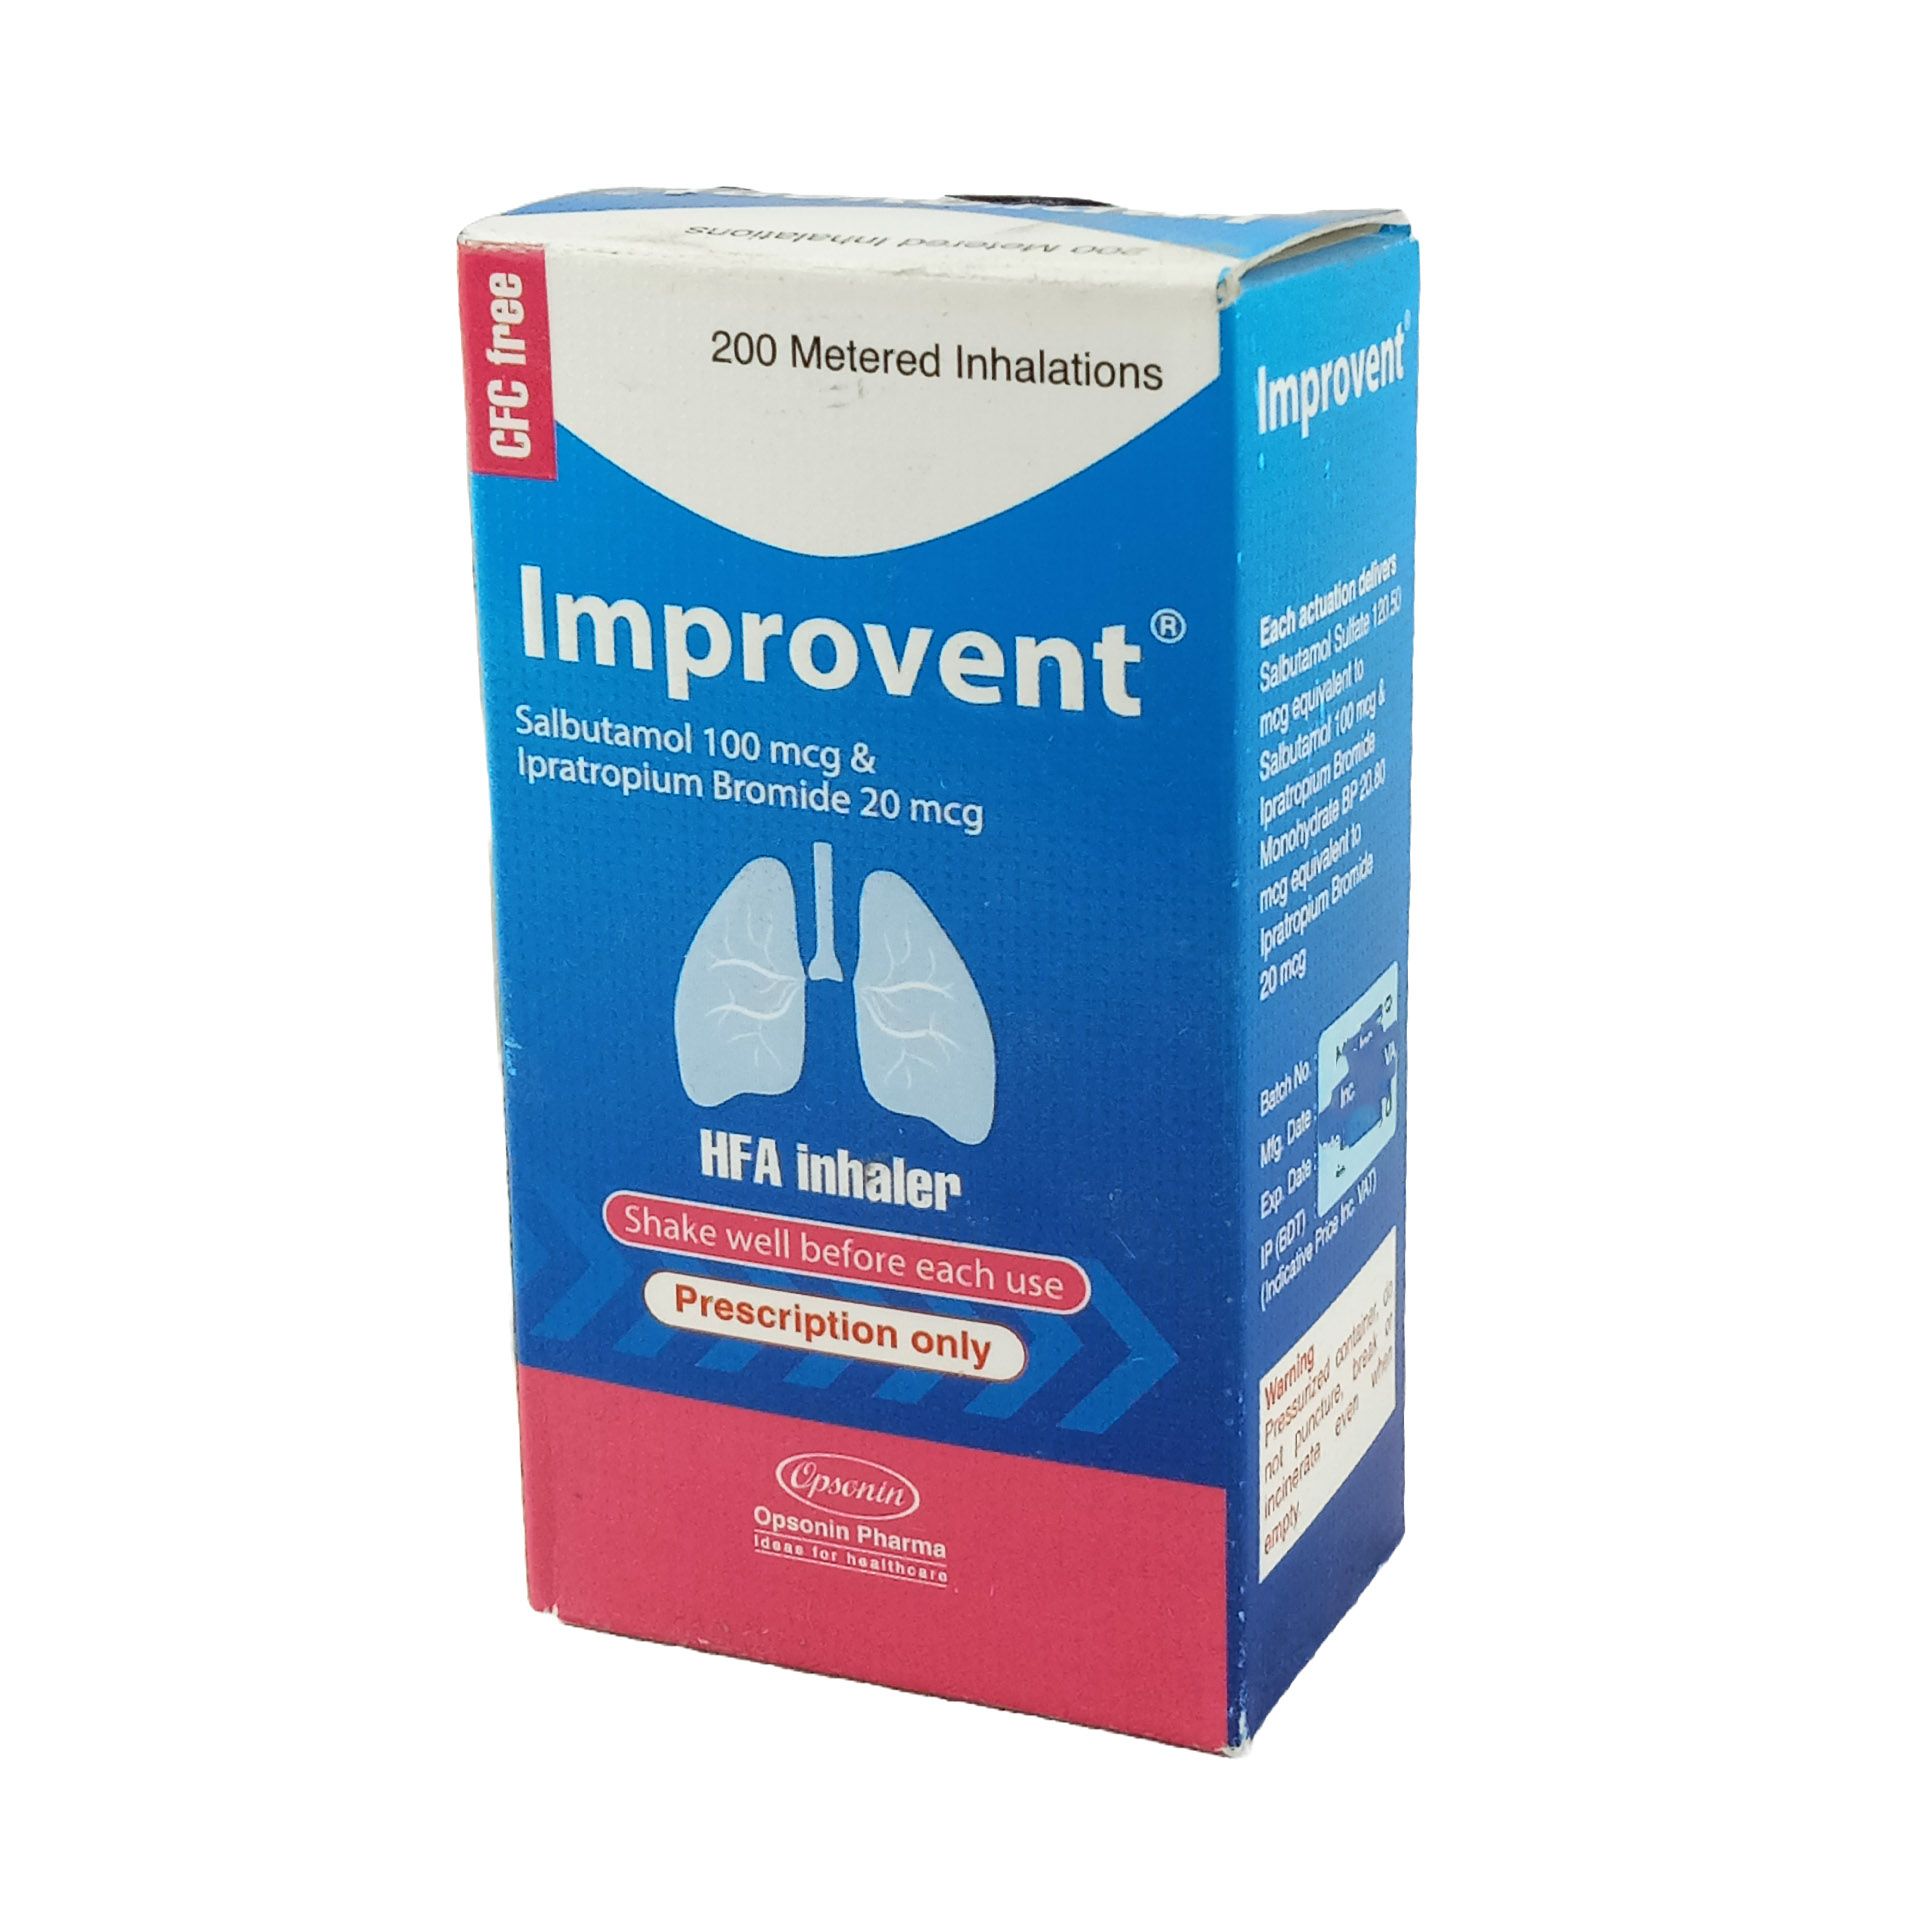 Improvent Inhelar 20mcg+100mcg/puff Inhaler